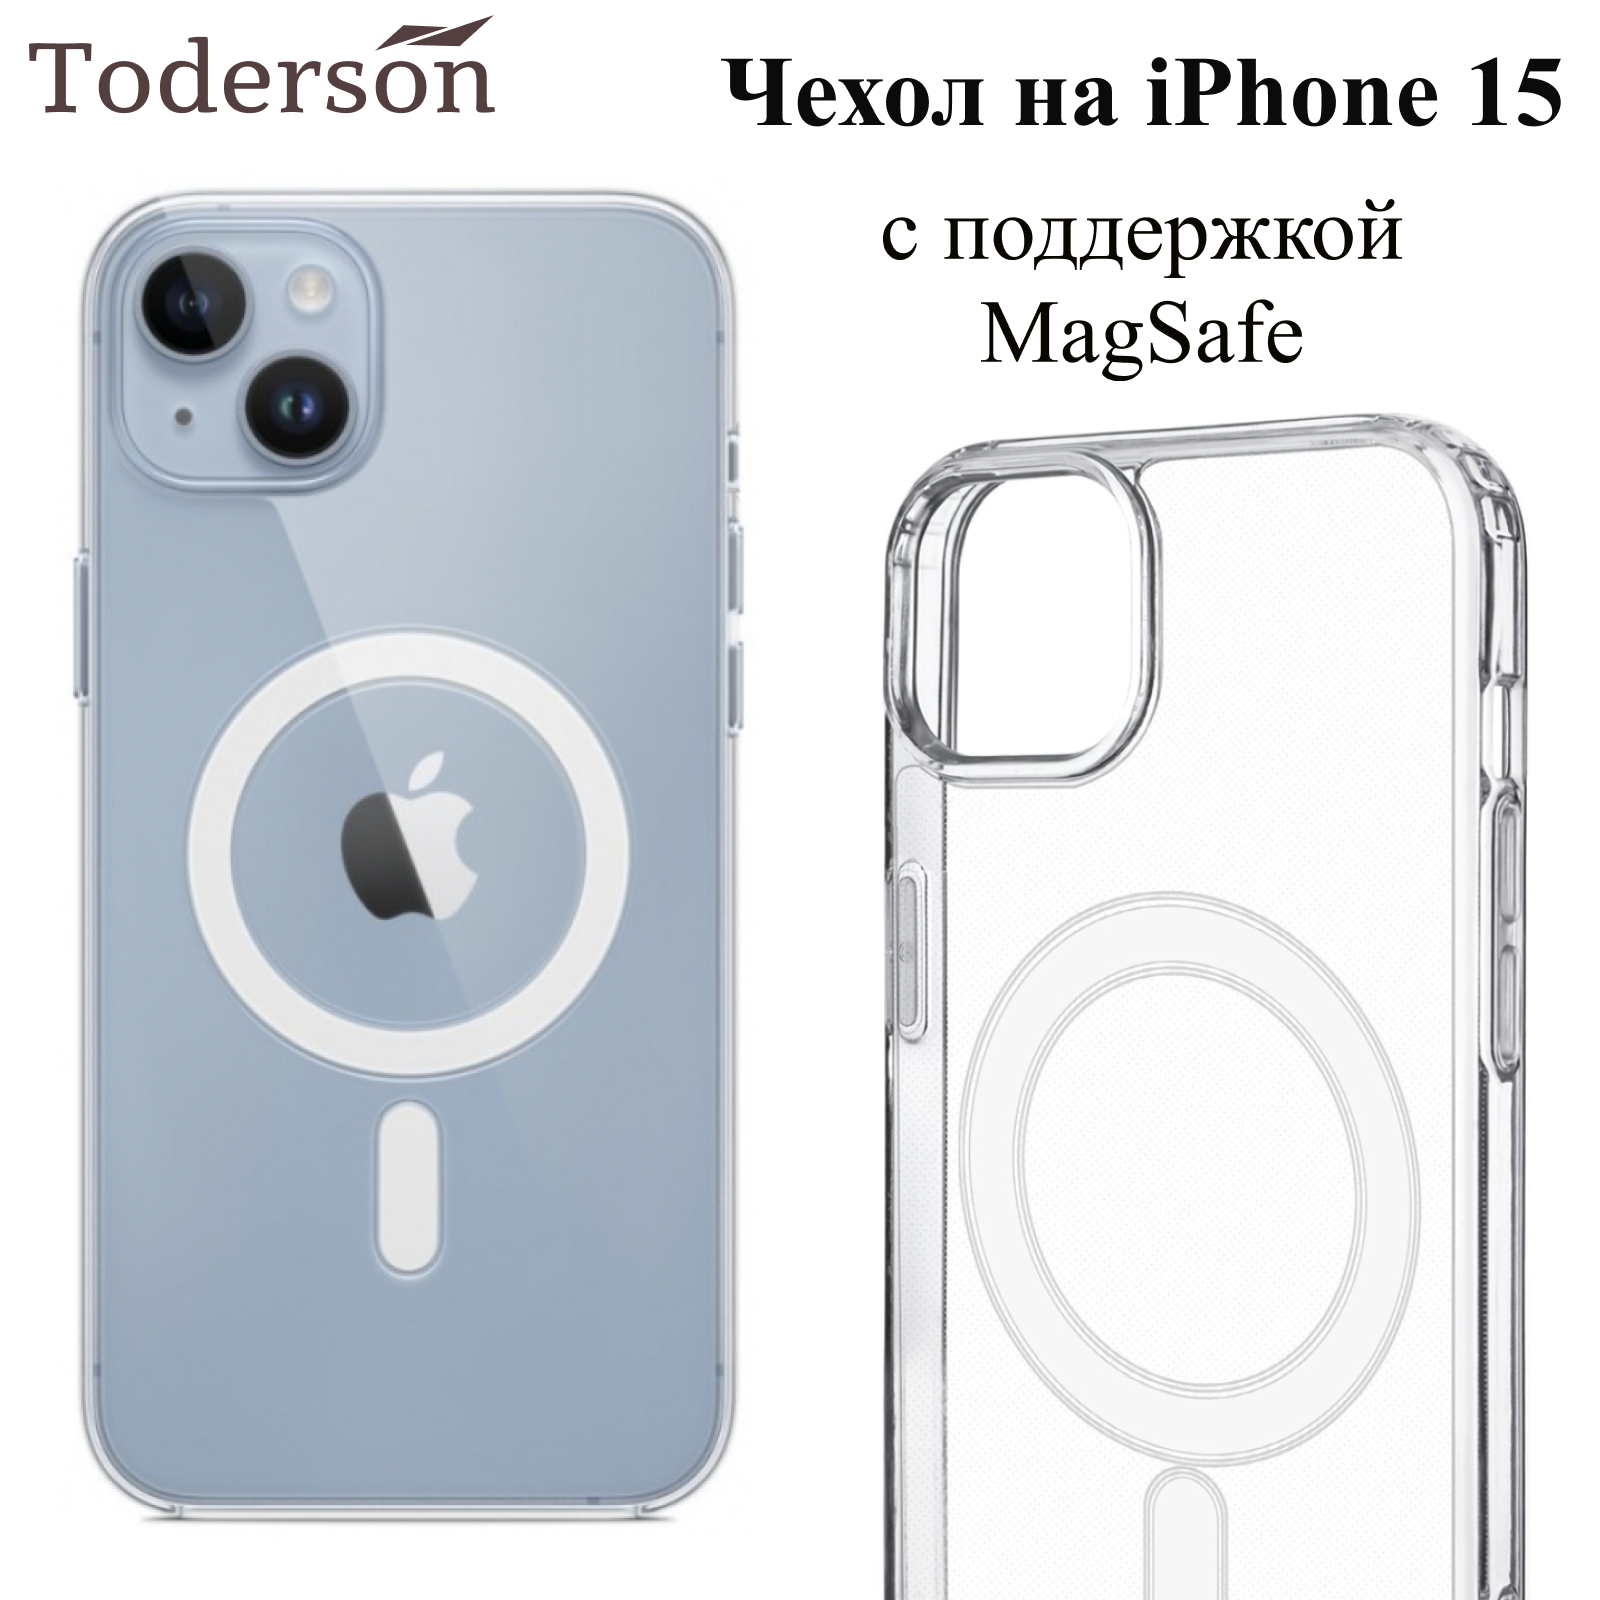 Чехол на iPhone 15 MagSafe Toderson